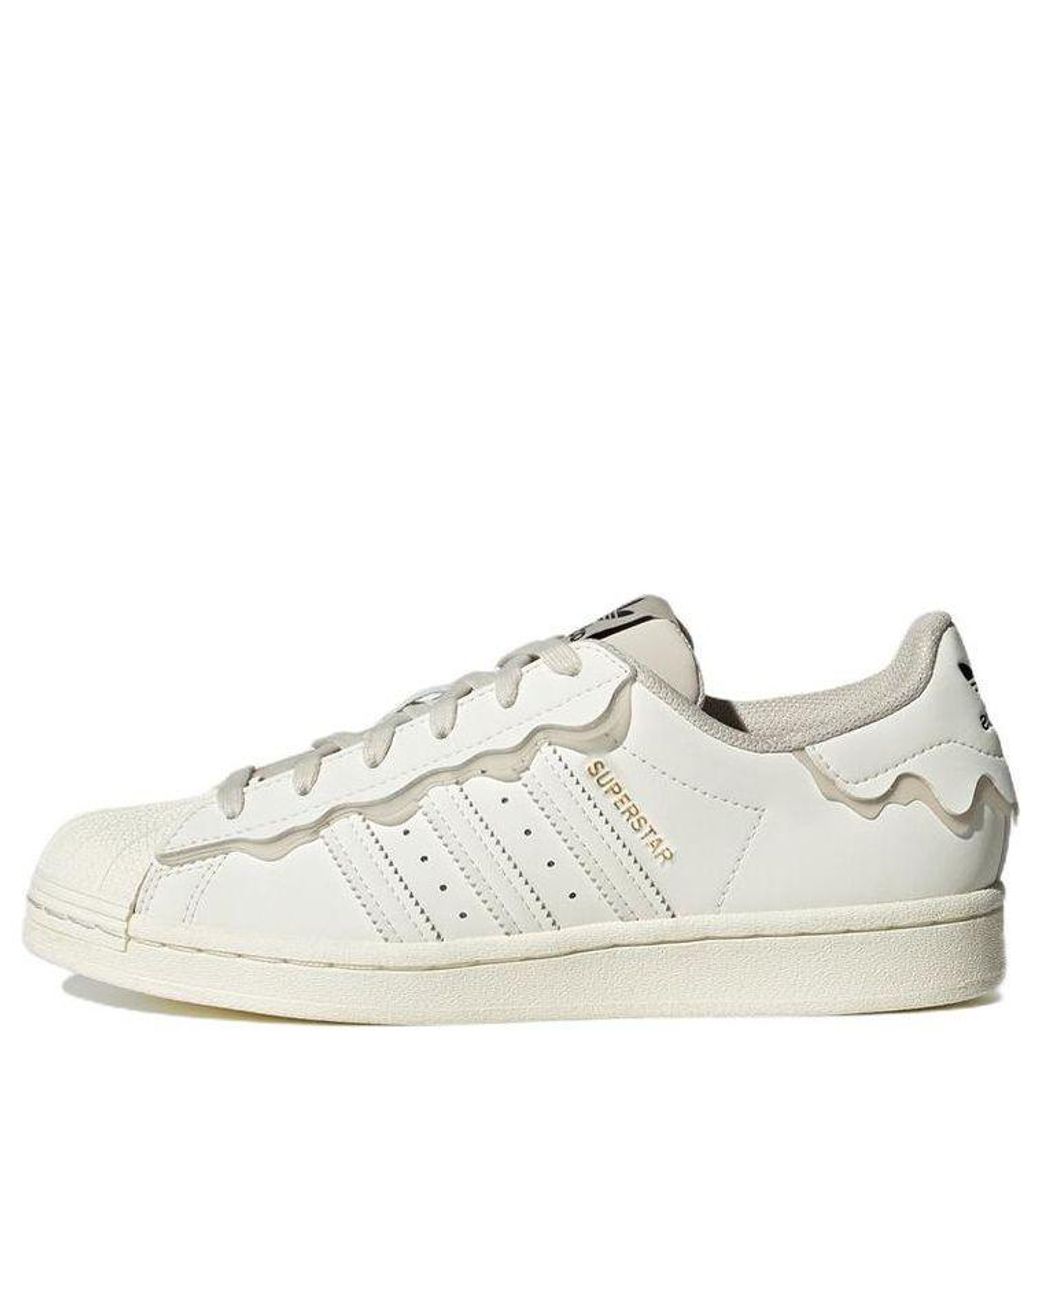 adidas Originals Superstar Sneakers Creamy in White | Lyst